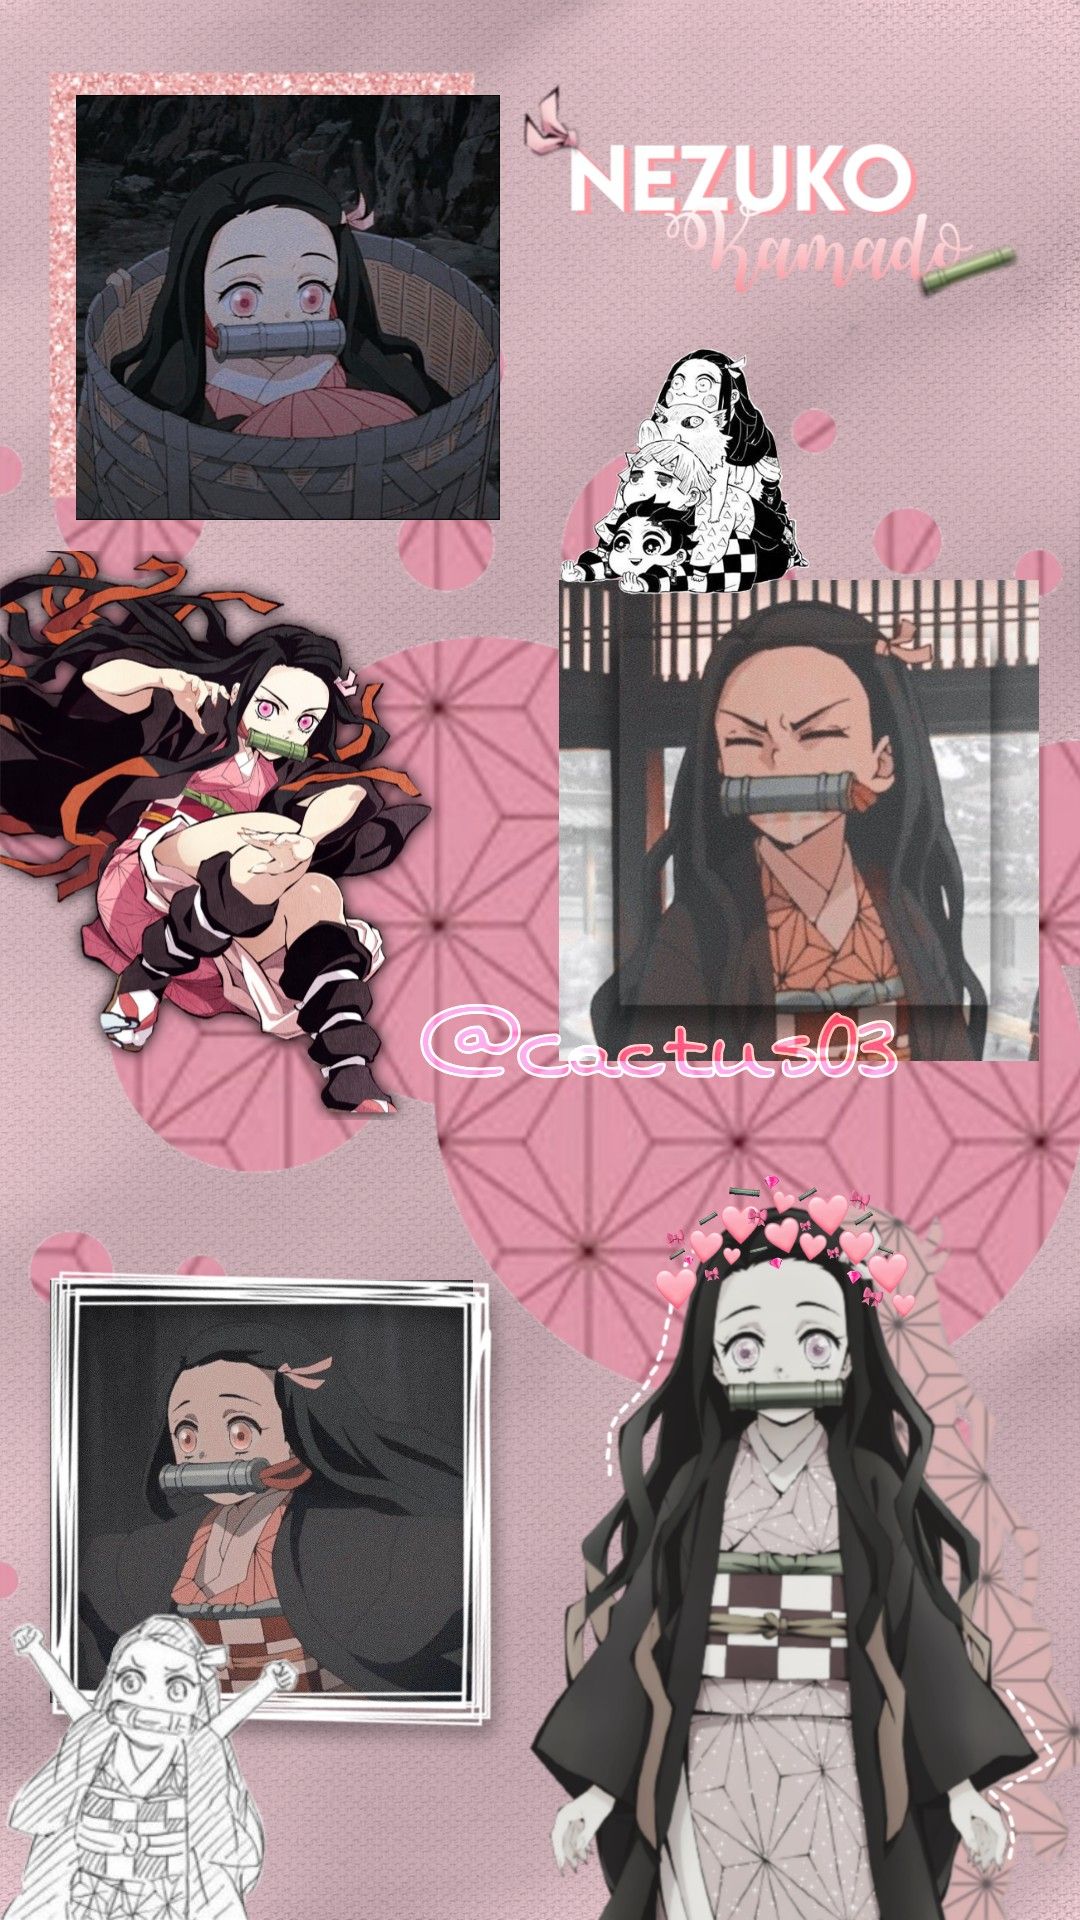 Nezuko Wallpaper. Anime wallpaper iphone, Anime background wallpaper, Cute anime chibi